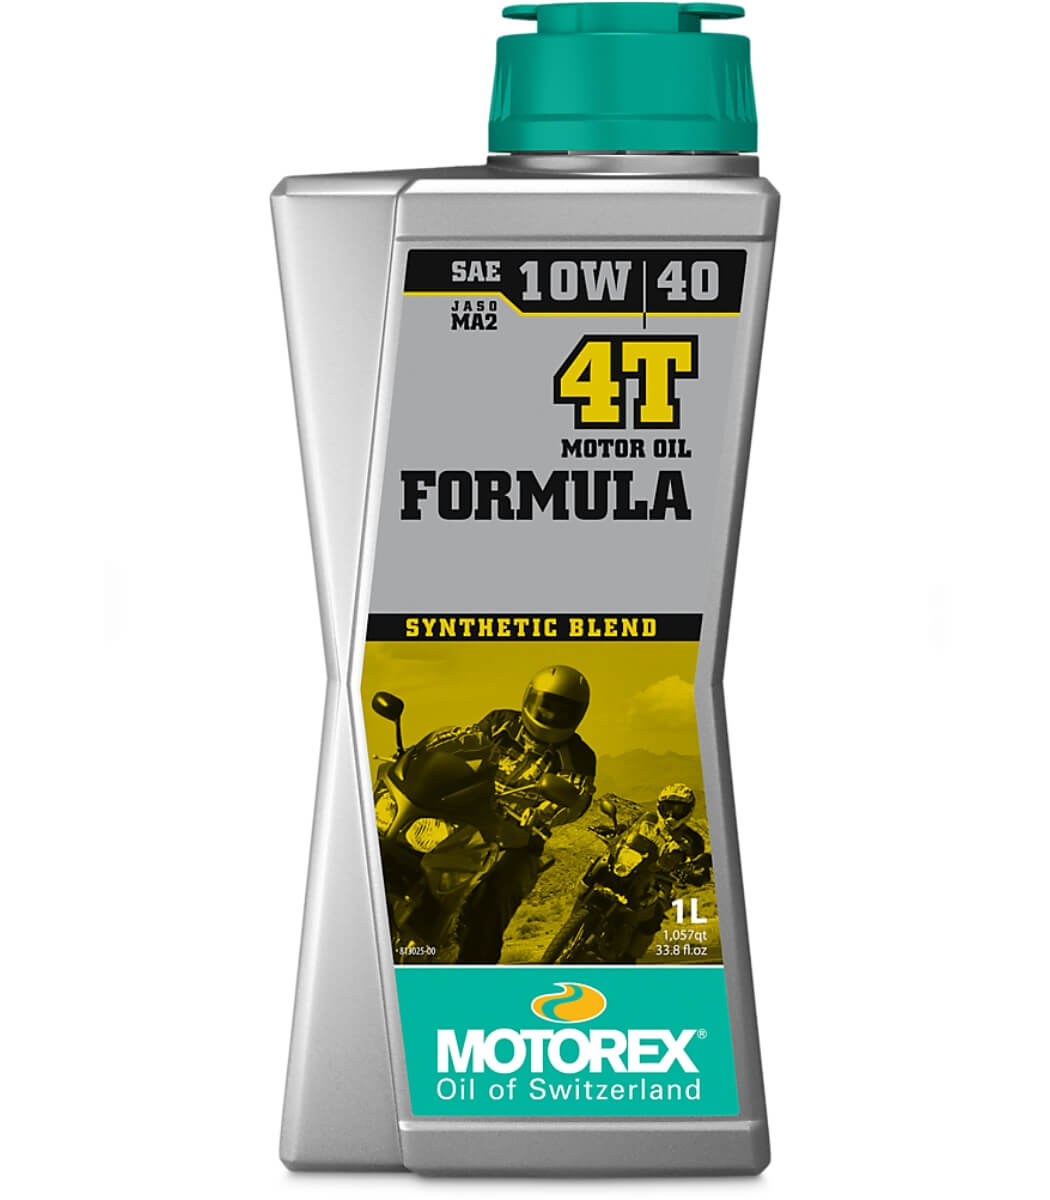 Motorex 4T Formula 10W/40